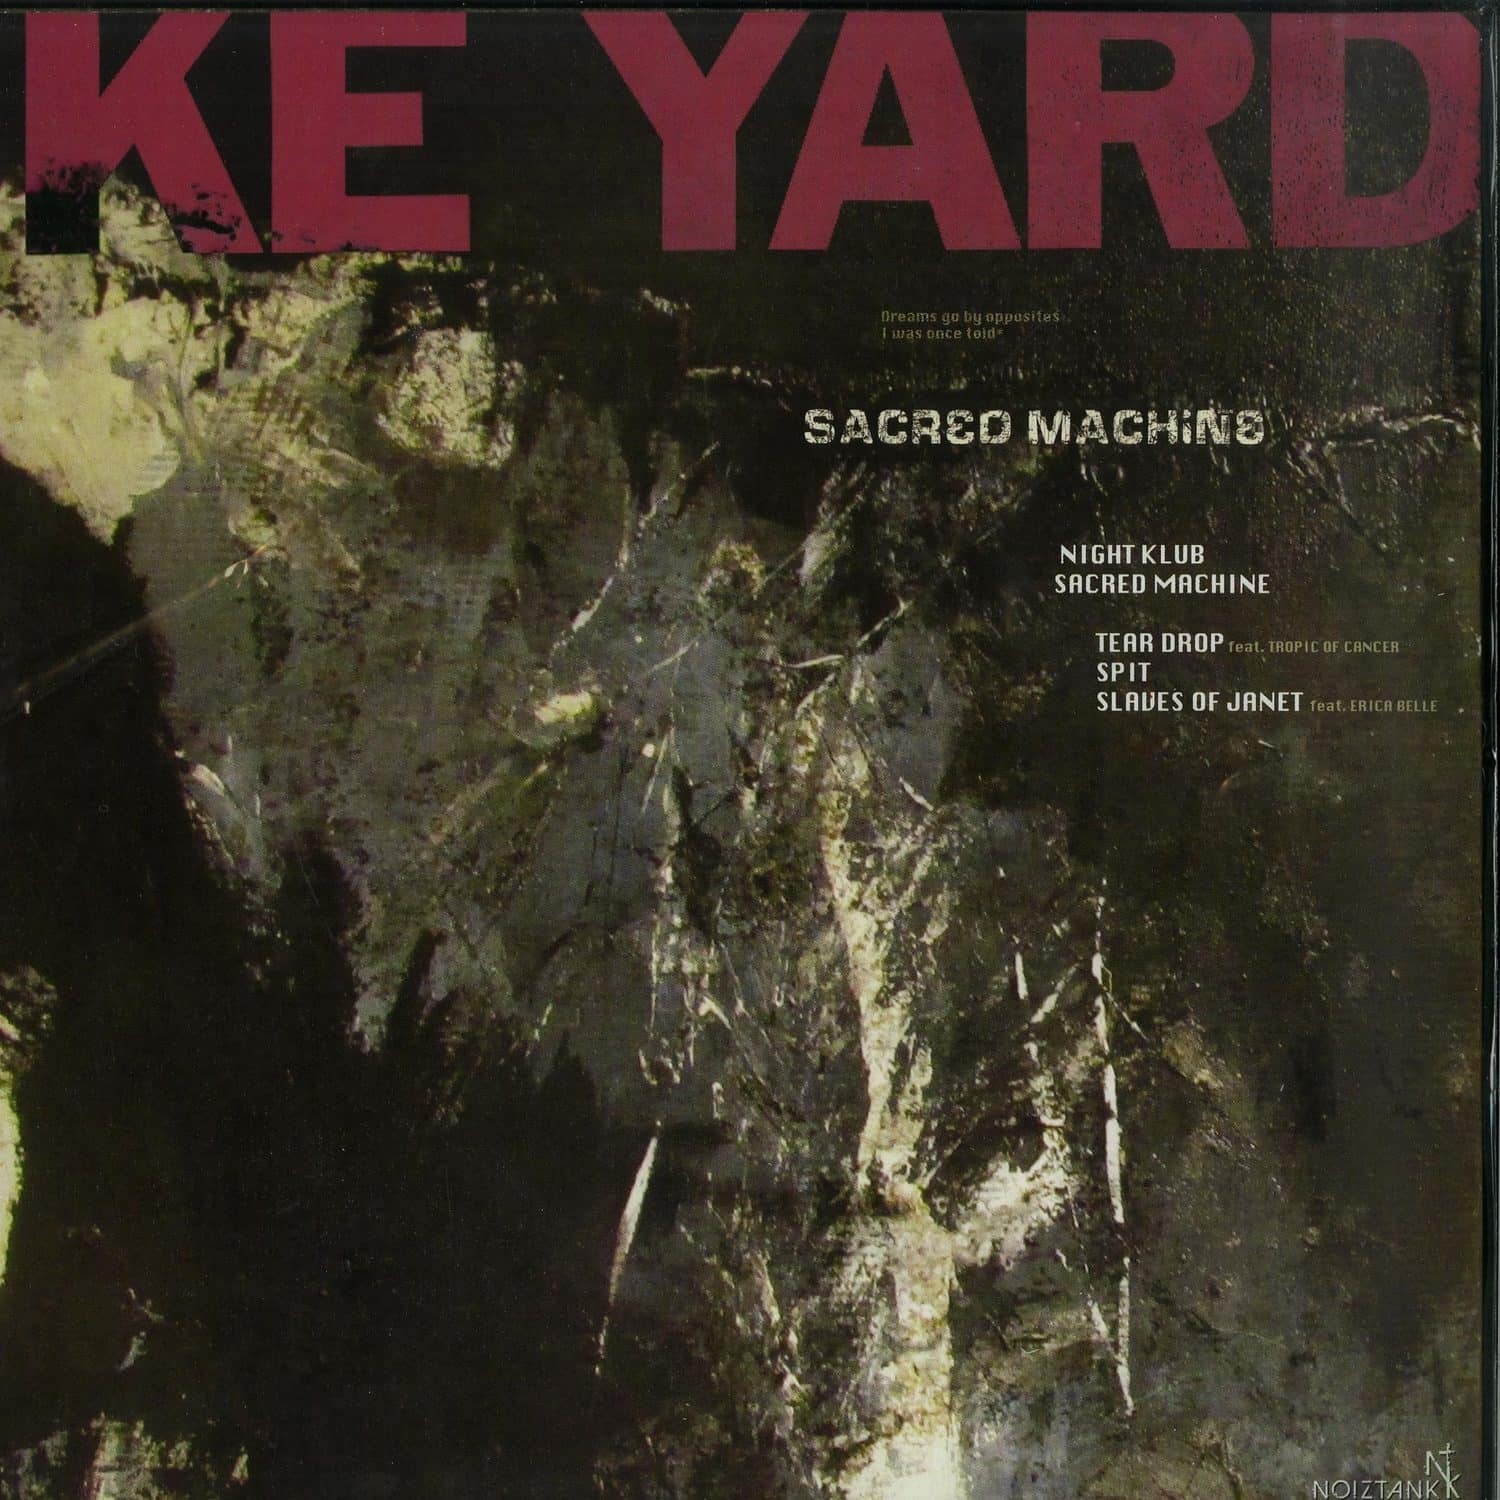 Ike Yard - SACRED MACHINE